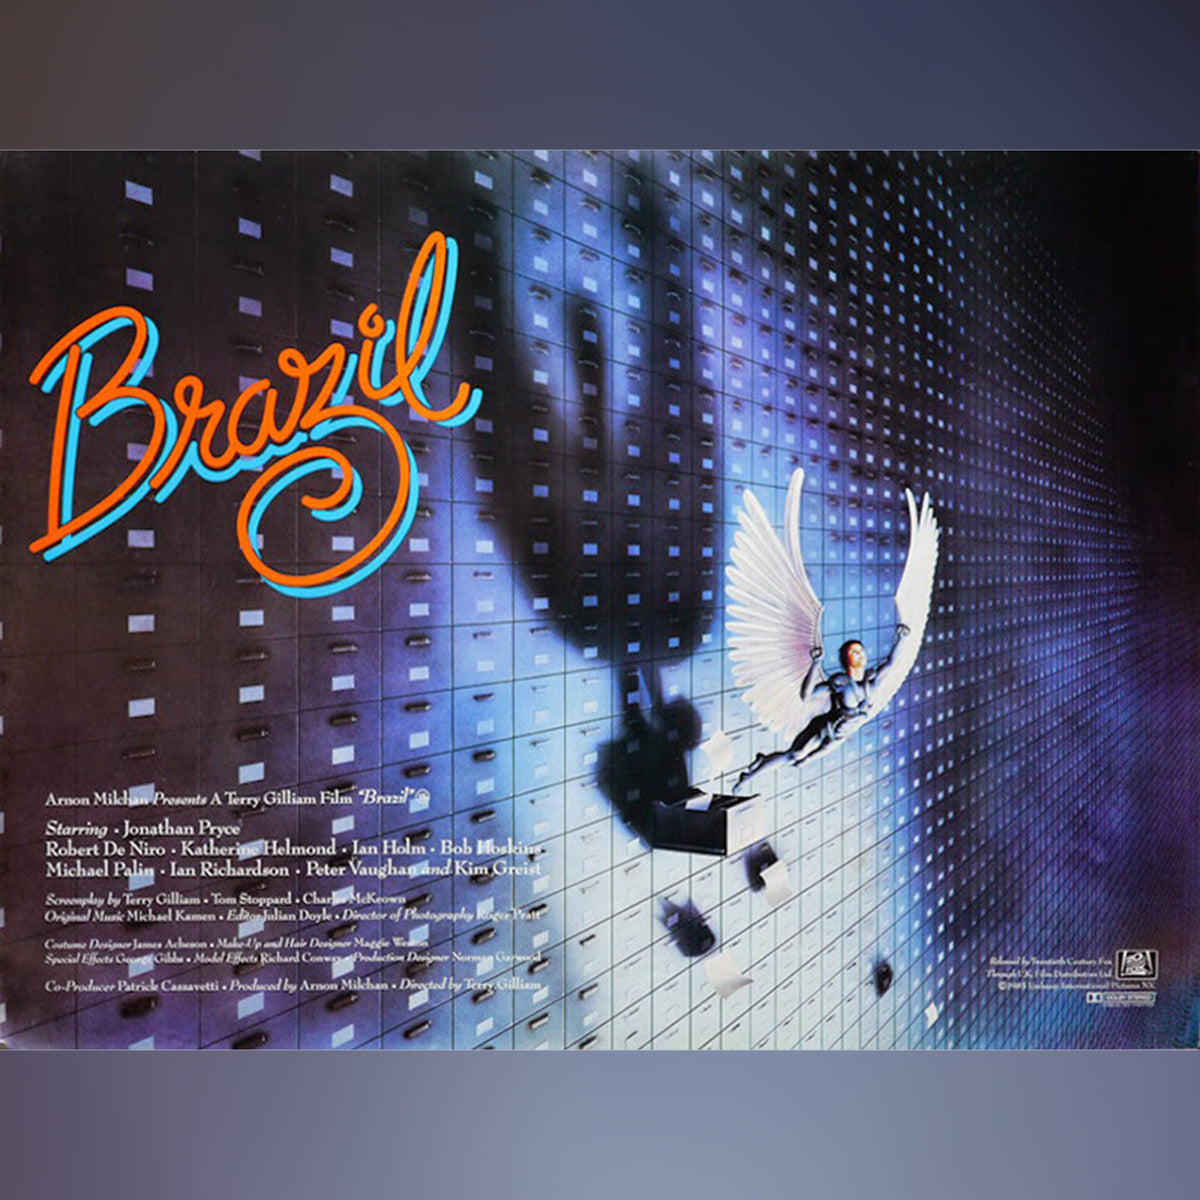 Original Movie Poster of Brazil (1985)